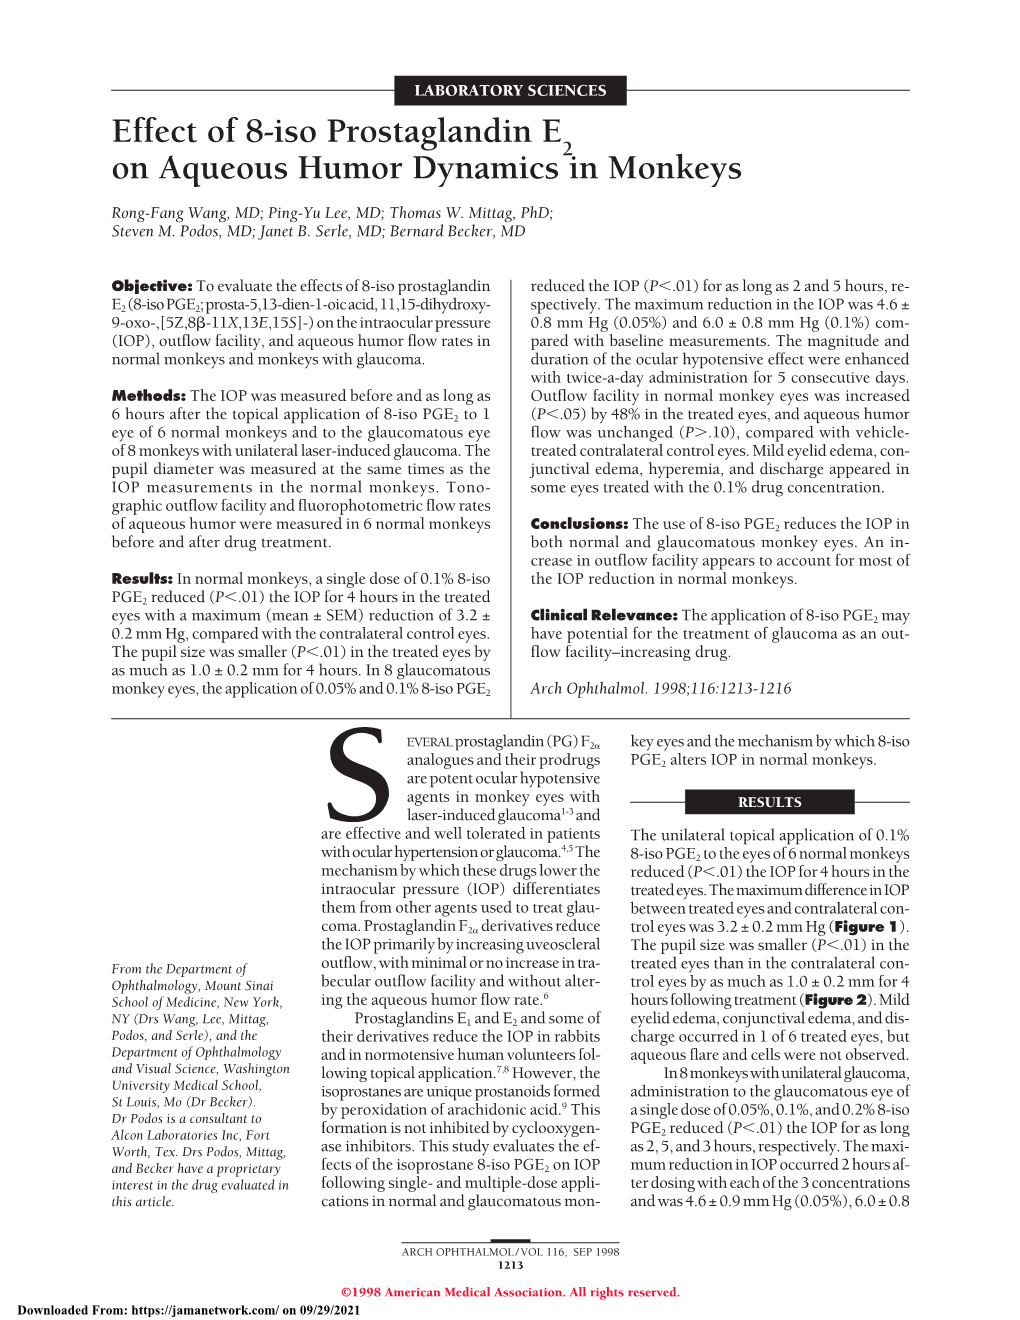 Effect of 8-Iso Prostaglandin E2 on Aqueous Humor Dynamics in Monkeys